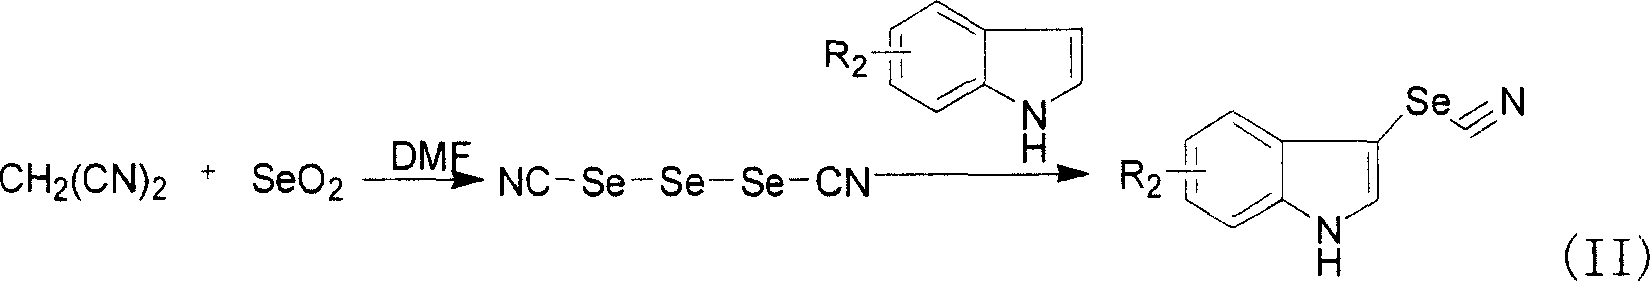 Synthesis of novel 3-seleno indole with vegetation promotion and selenium enriching functions